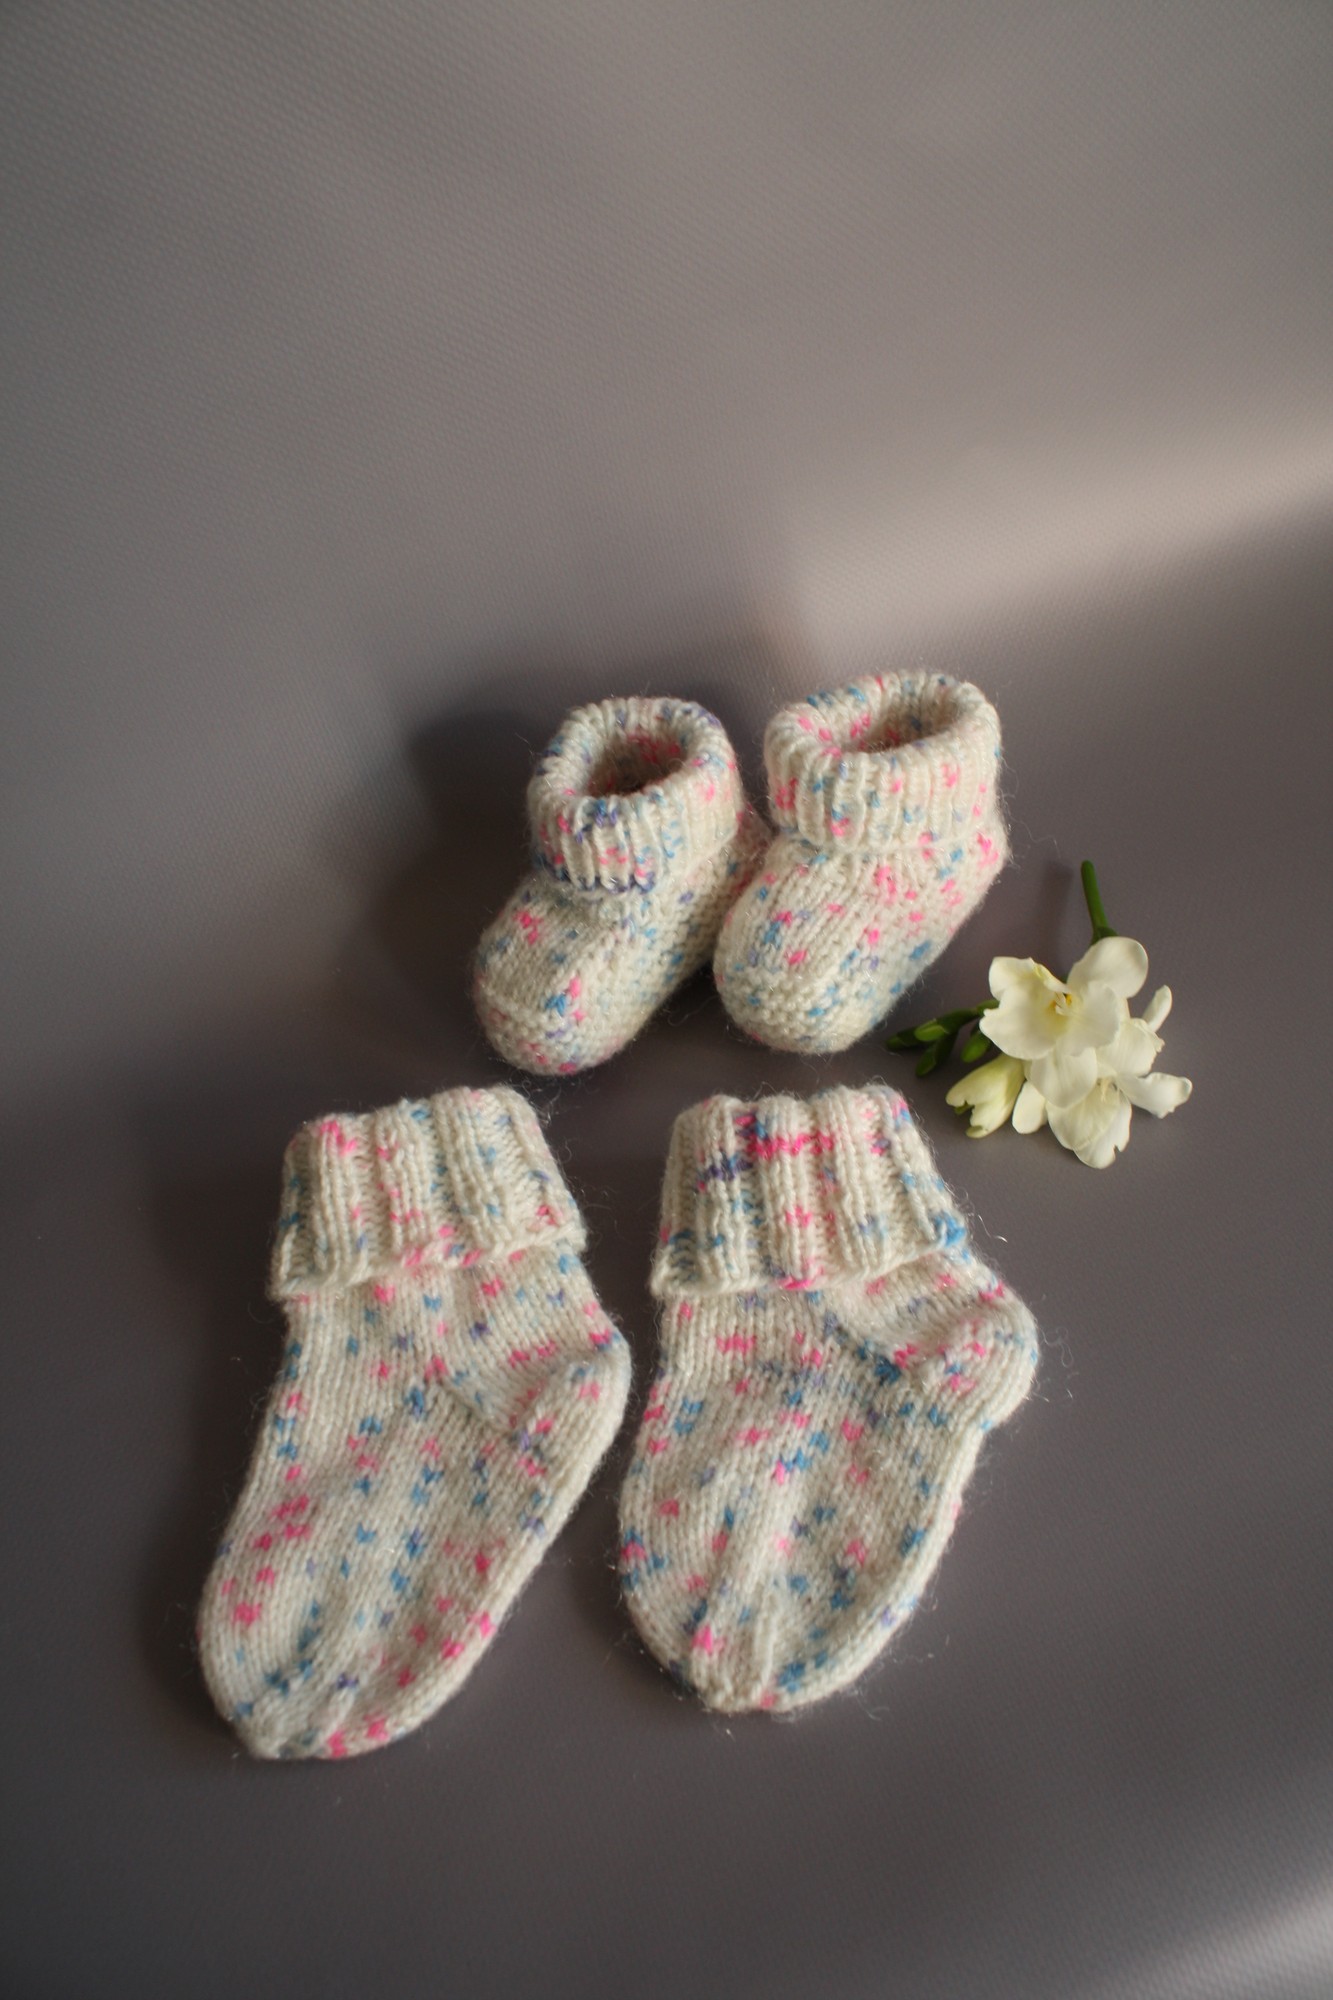 Handmade knitting booties and socks for babies